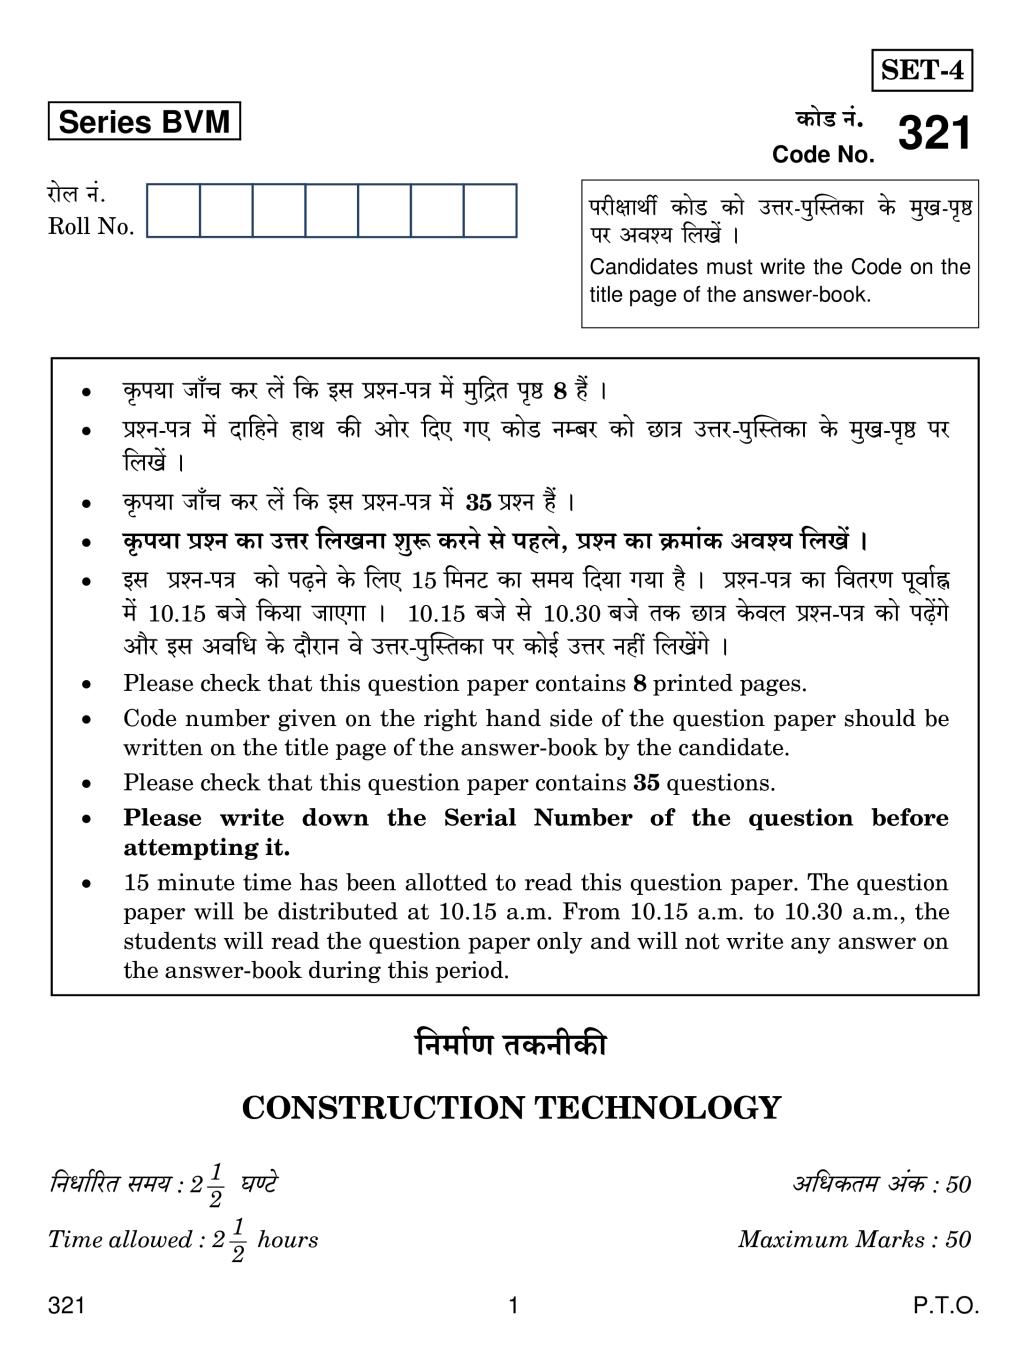 CBSE Class 12 Construction Technology Question Paper 2019 - Page 1